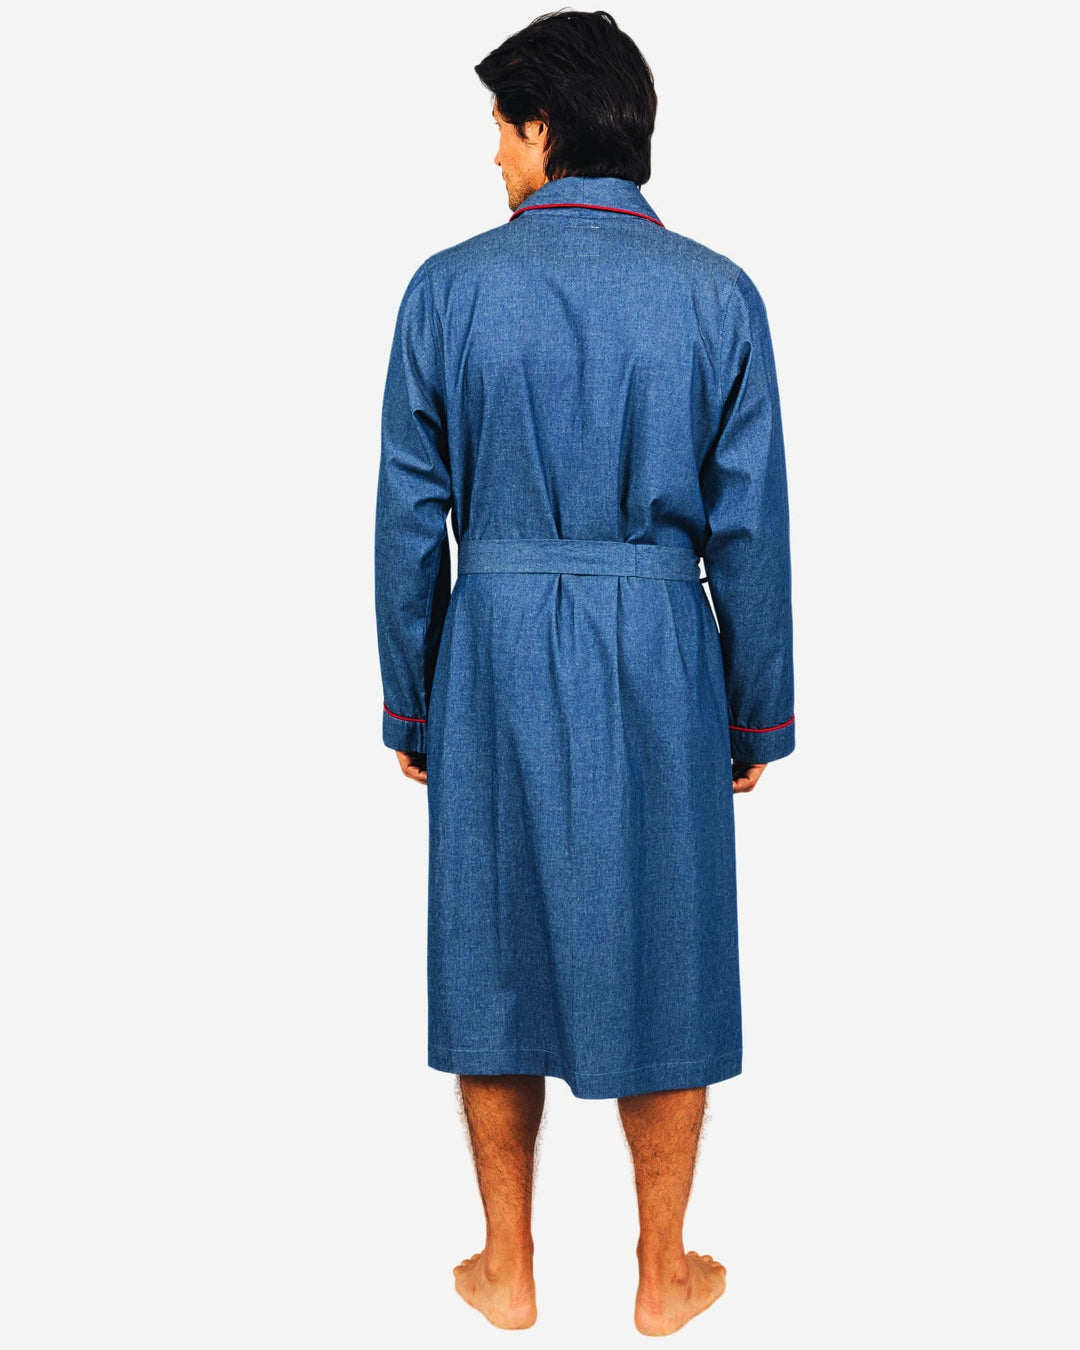 Mens mid blue dressing gown in denim